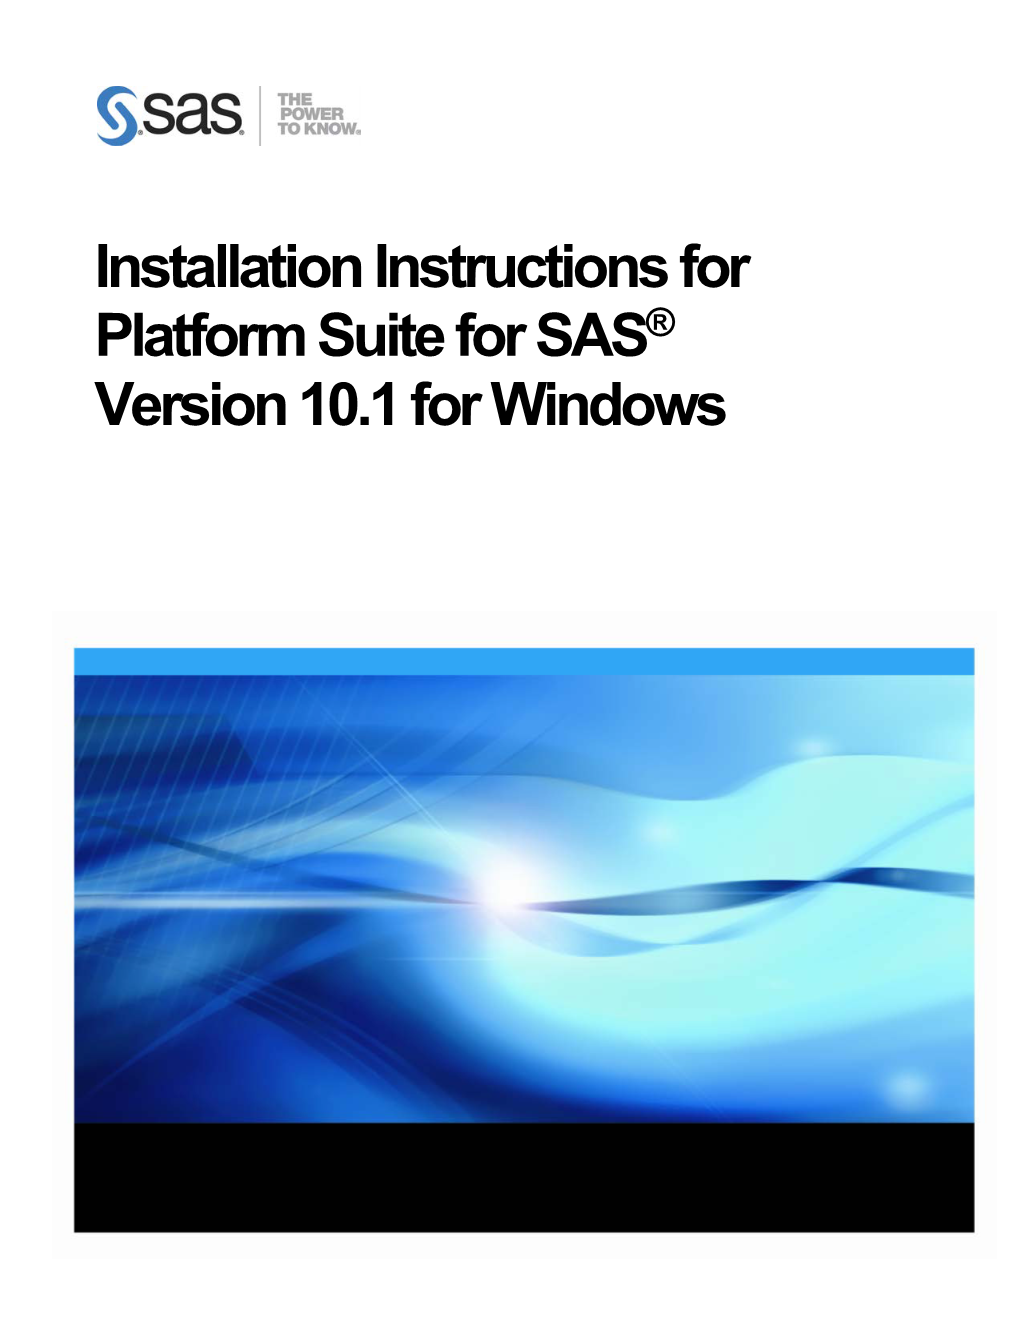 Installing the Platform Suite for SAS Version 10.1 On